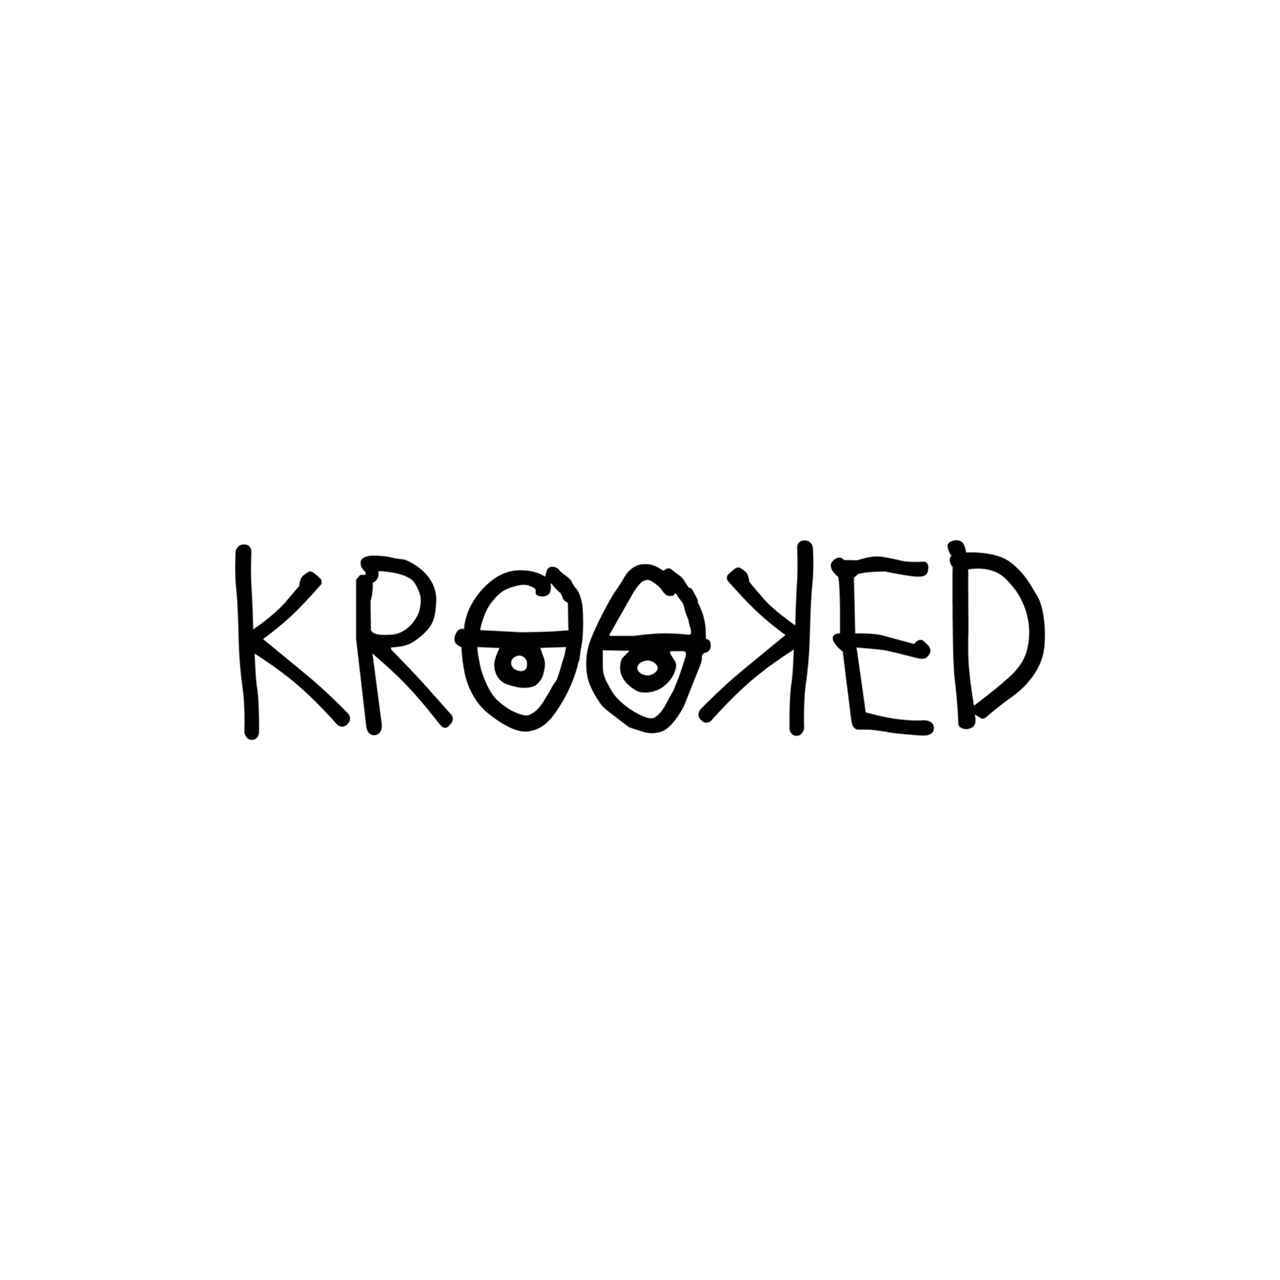 Krooked Logo - Krooked Vinyl Decal